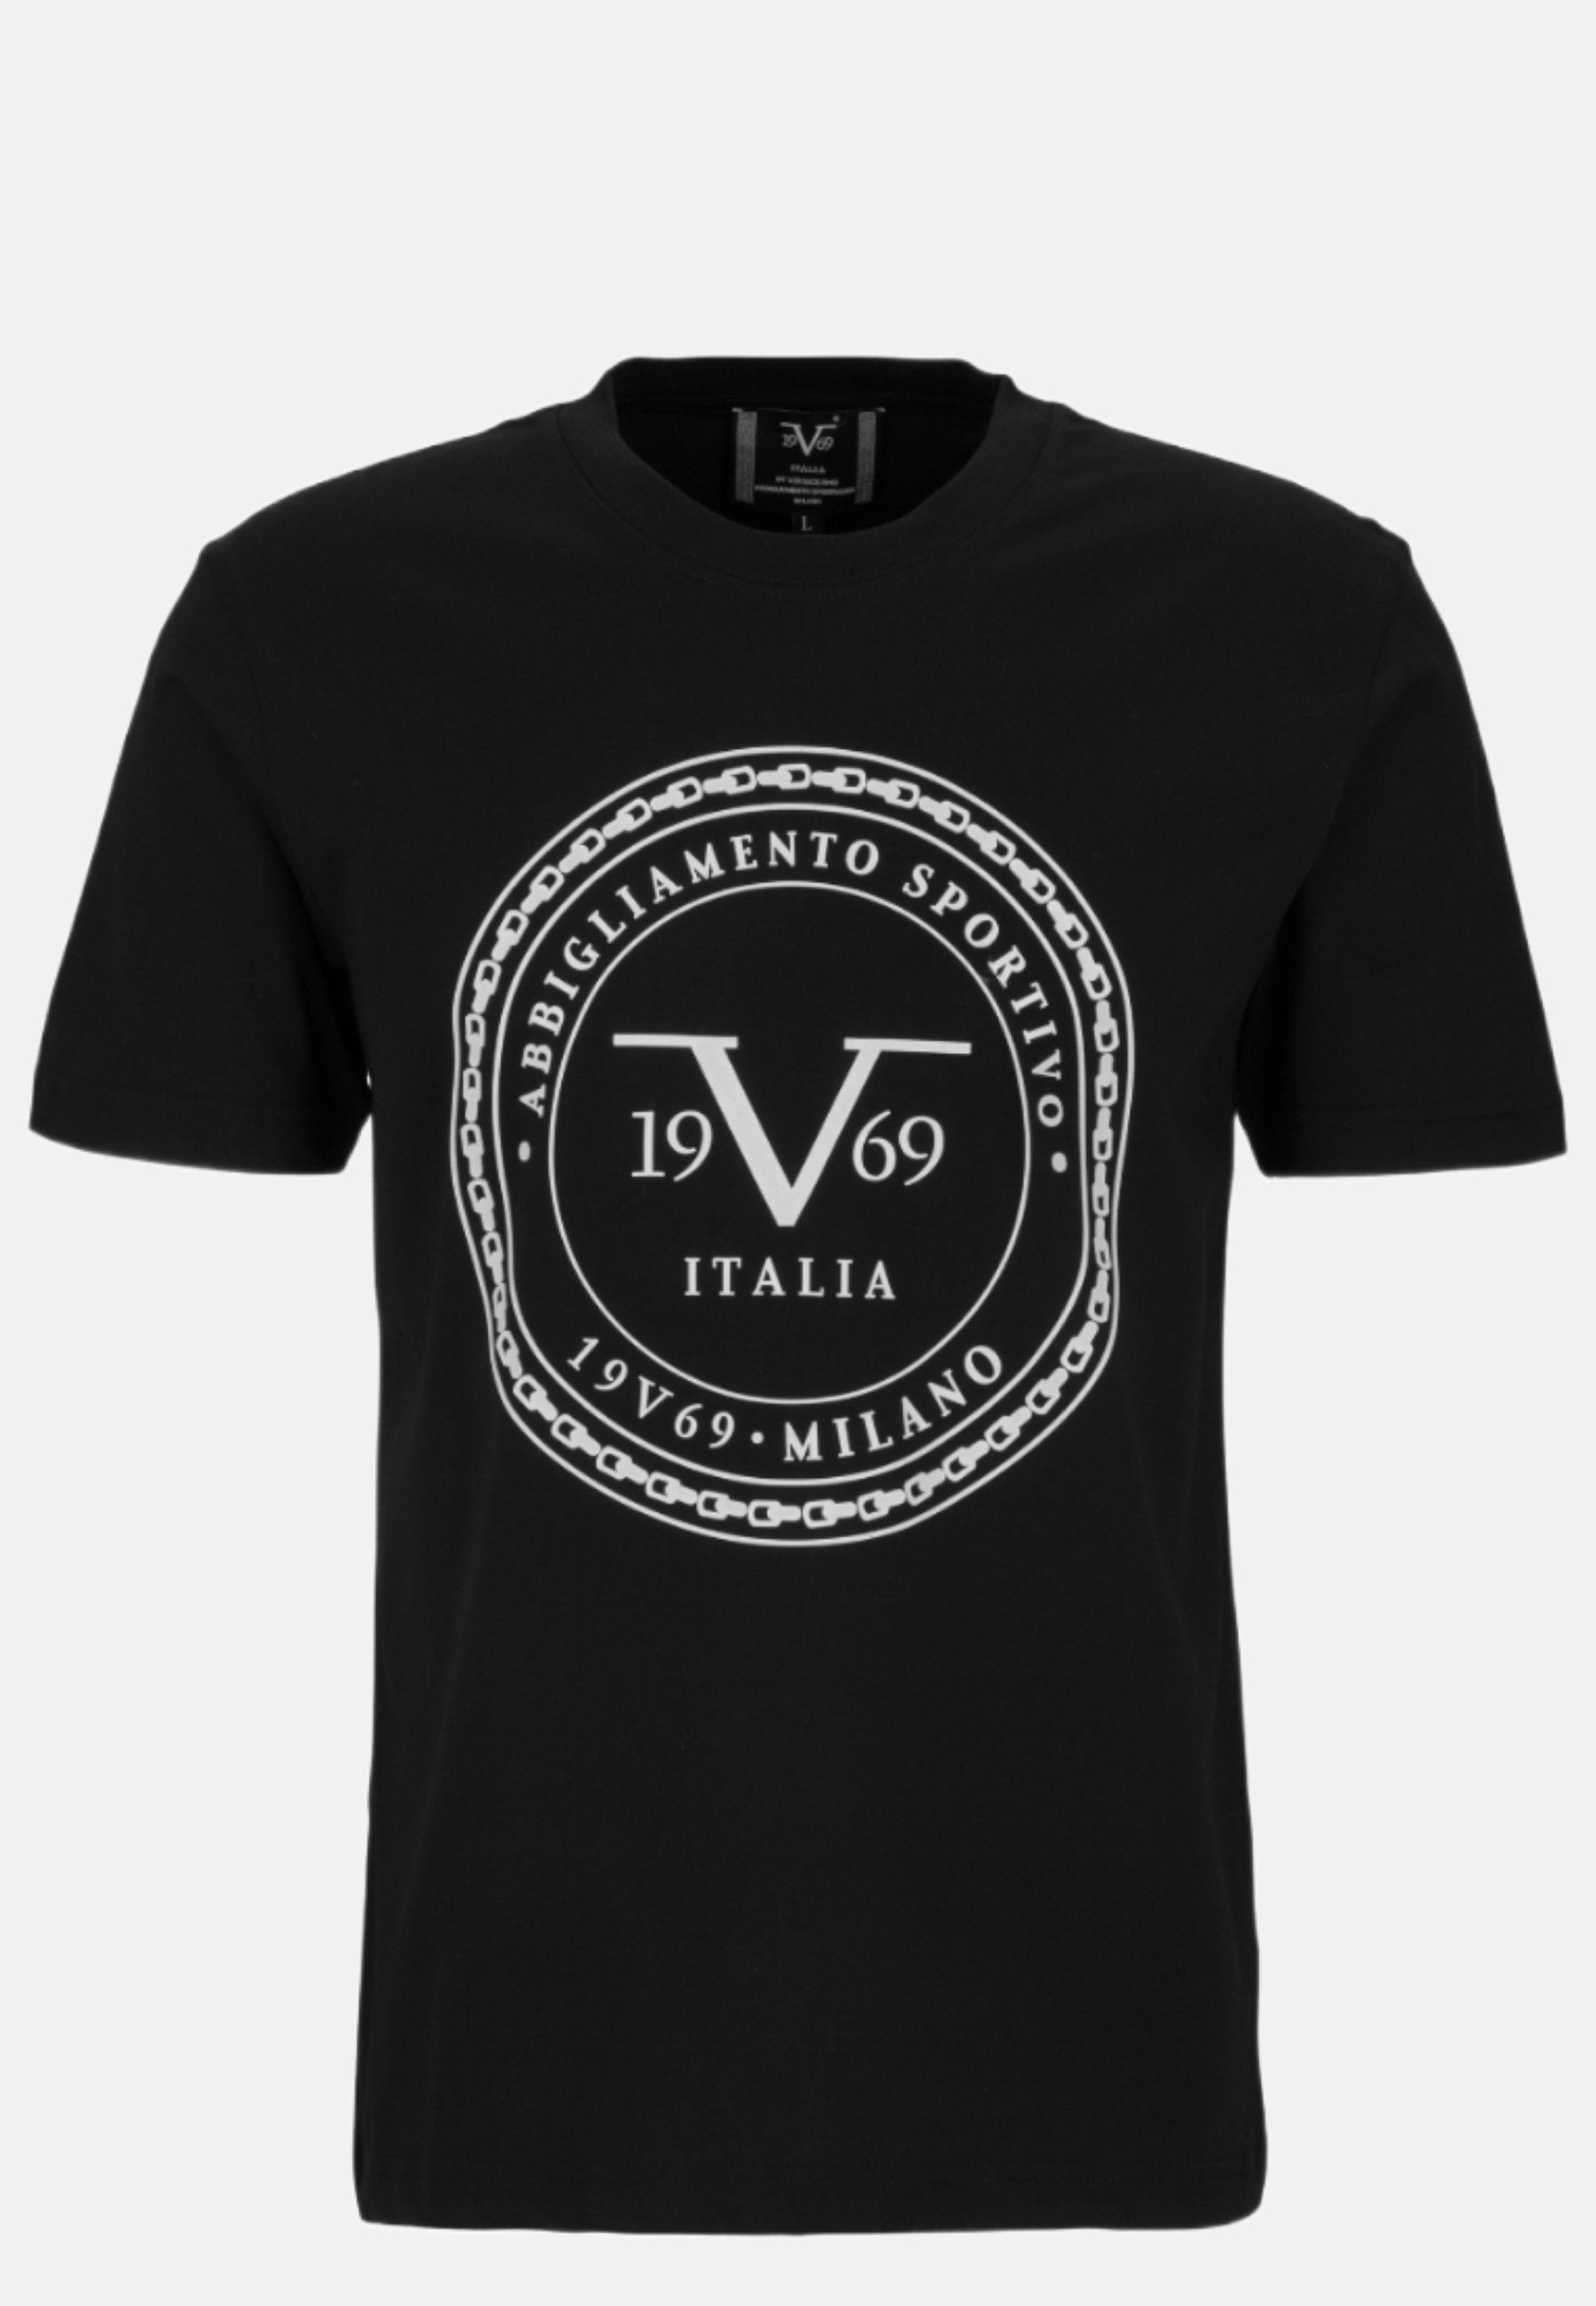 19V69 Italia by Felix Versace T-Shirt T-Shirt BLACK